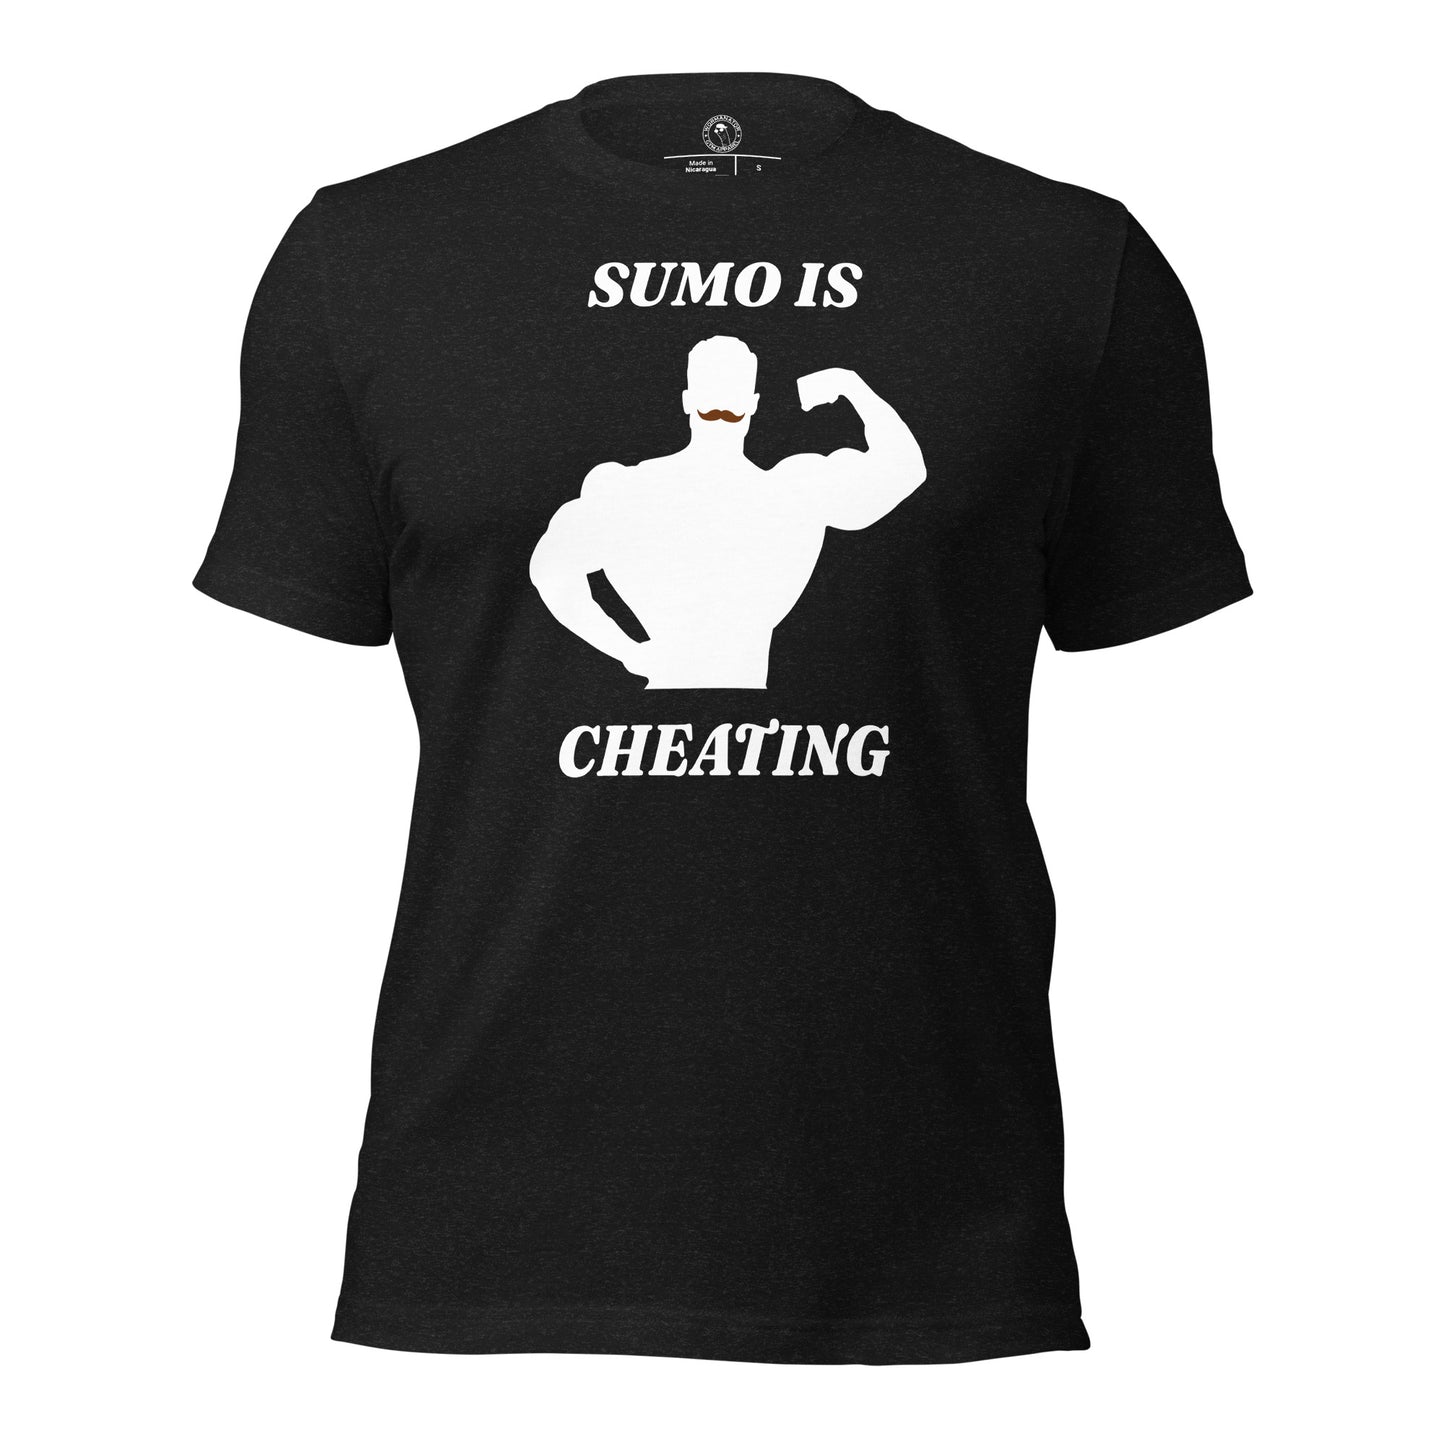 CBum Sumo is Cheating Shirt in Black Heather